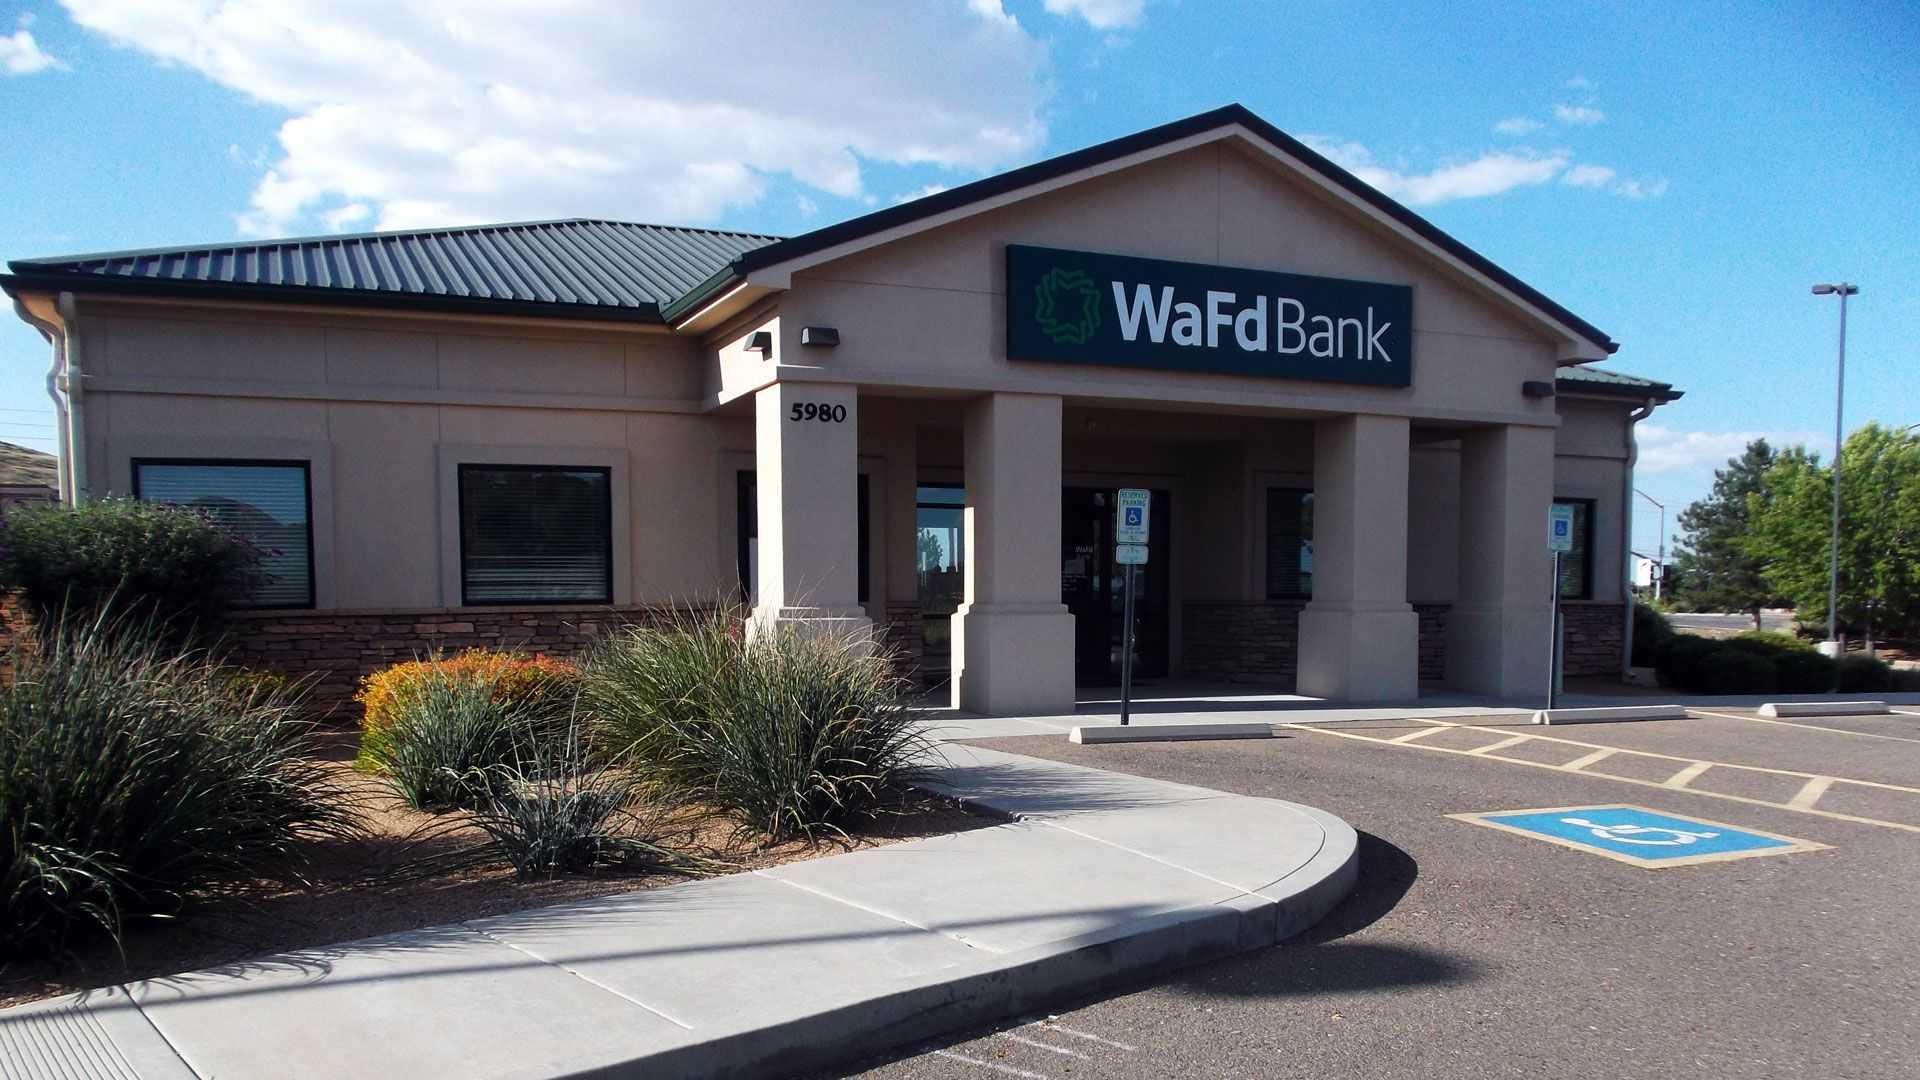 WaFd Bank in Prescott Valley, Arizona #1166 - Washington Federal.